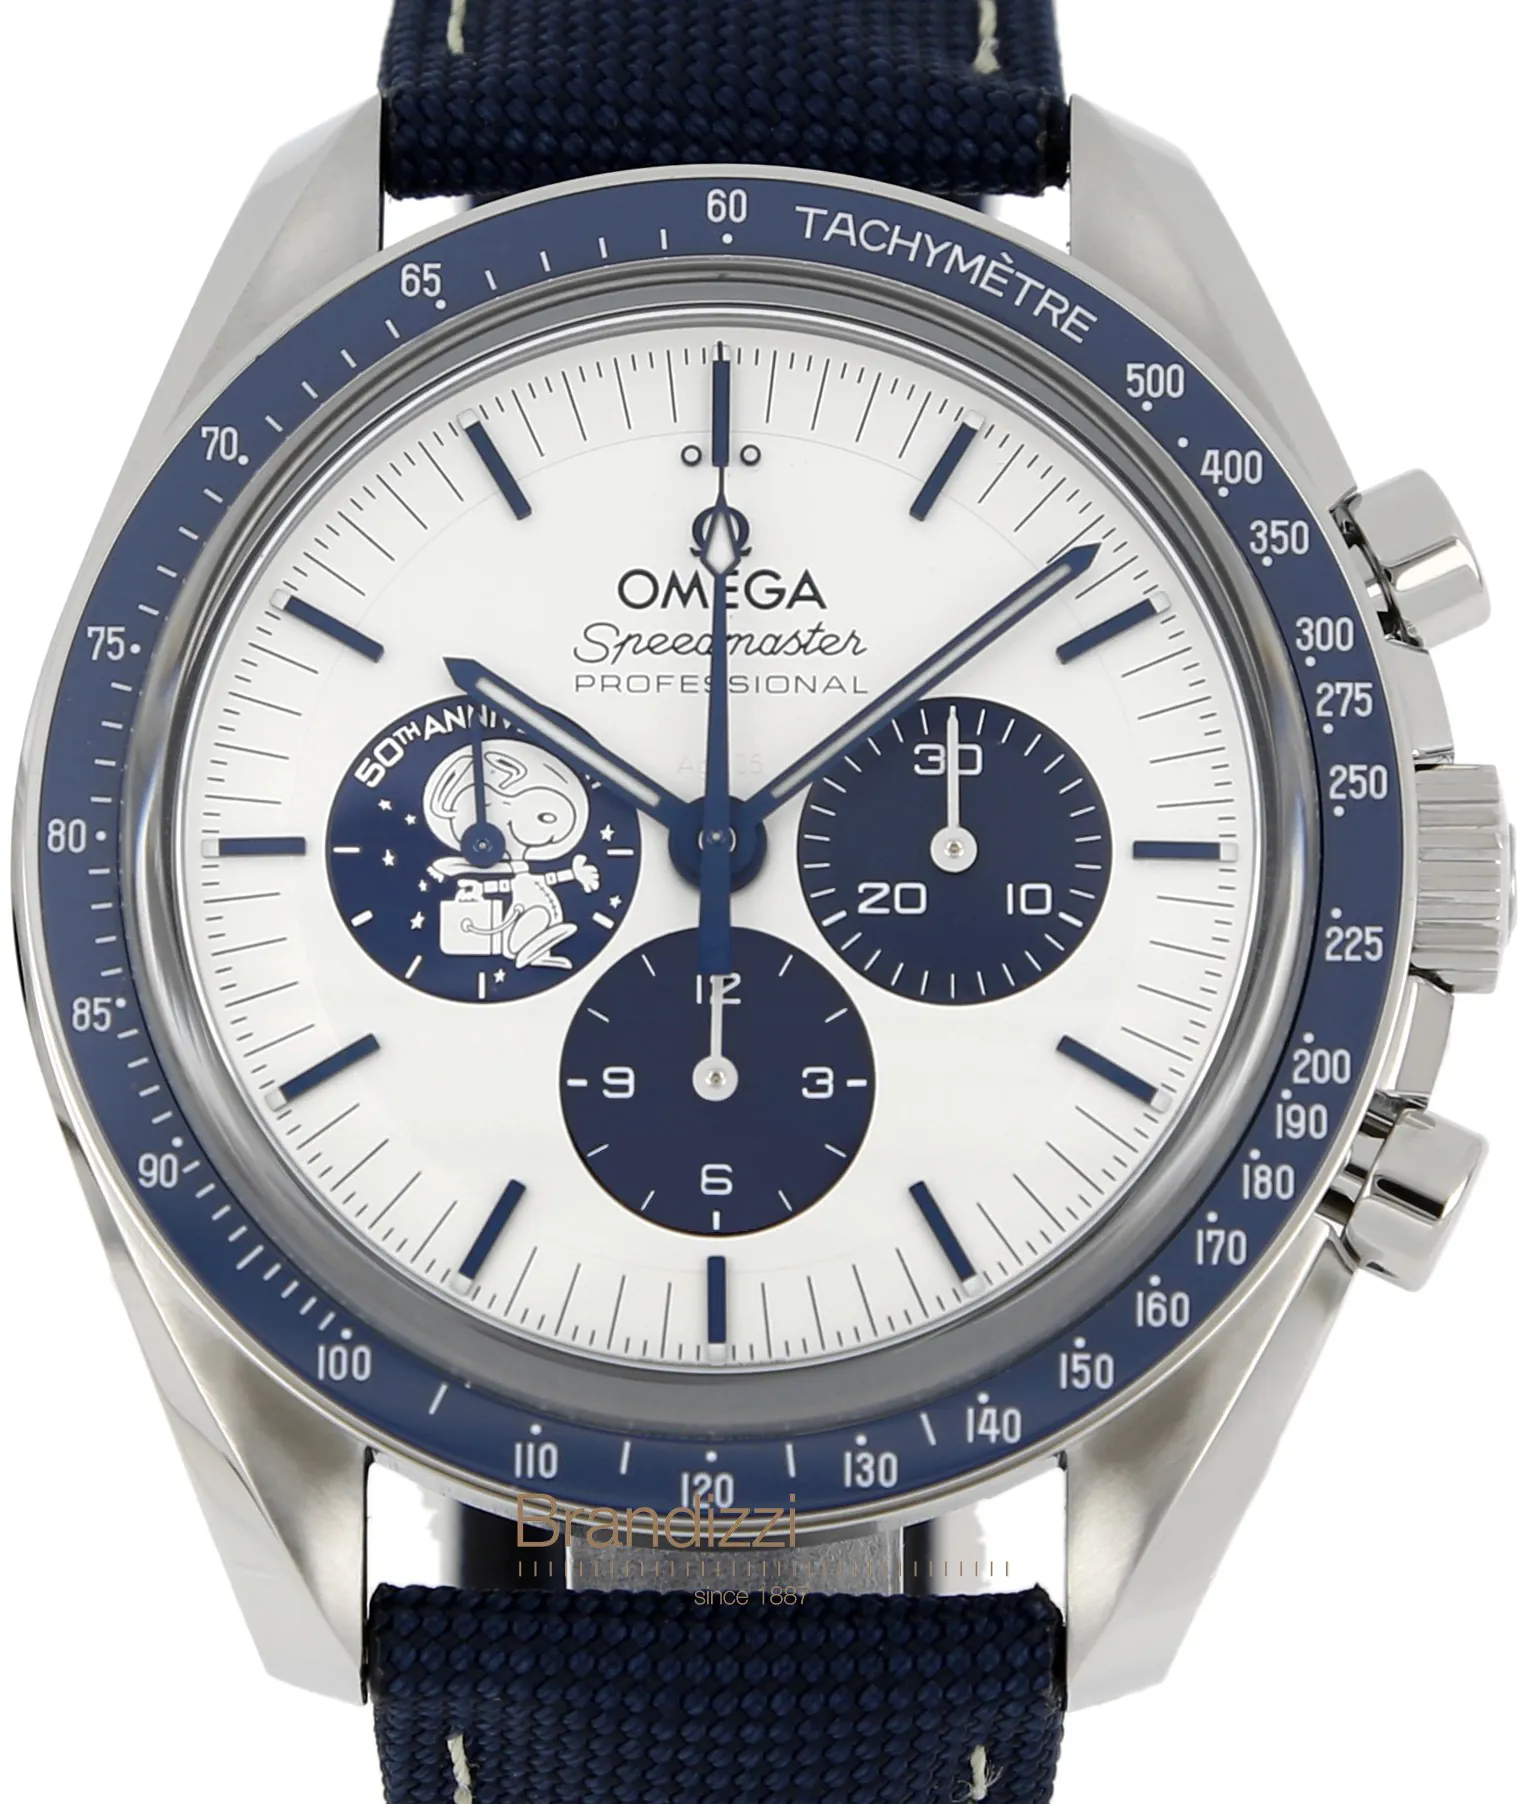 Omega Speedmaster Moon watch 310.32.42.50.02.001 42mm Silver